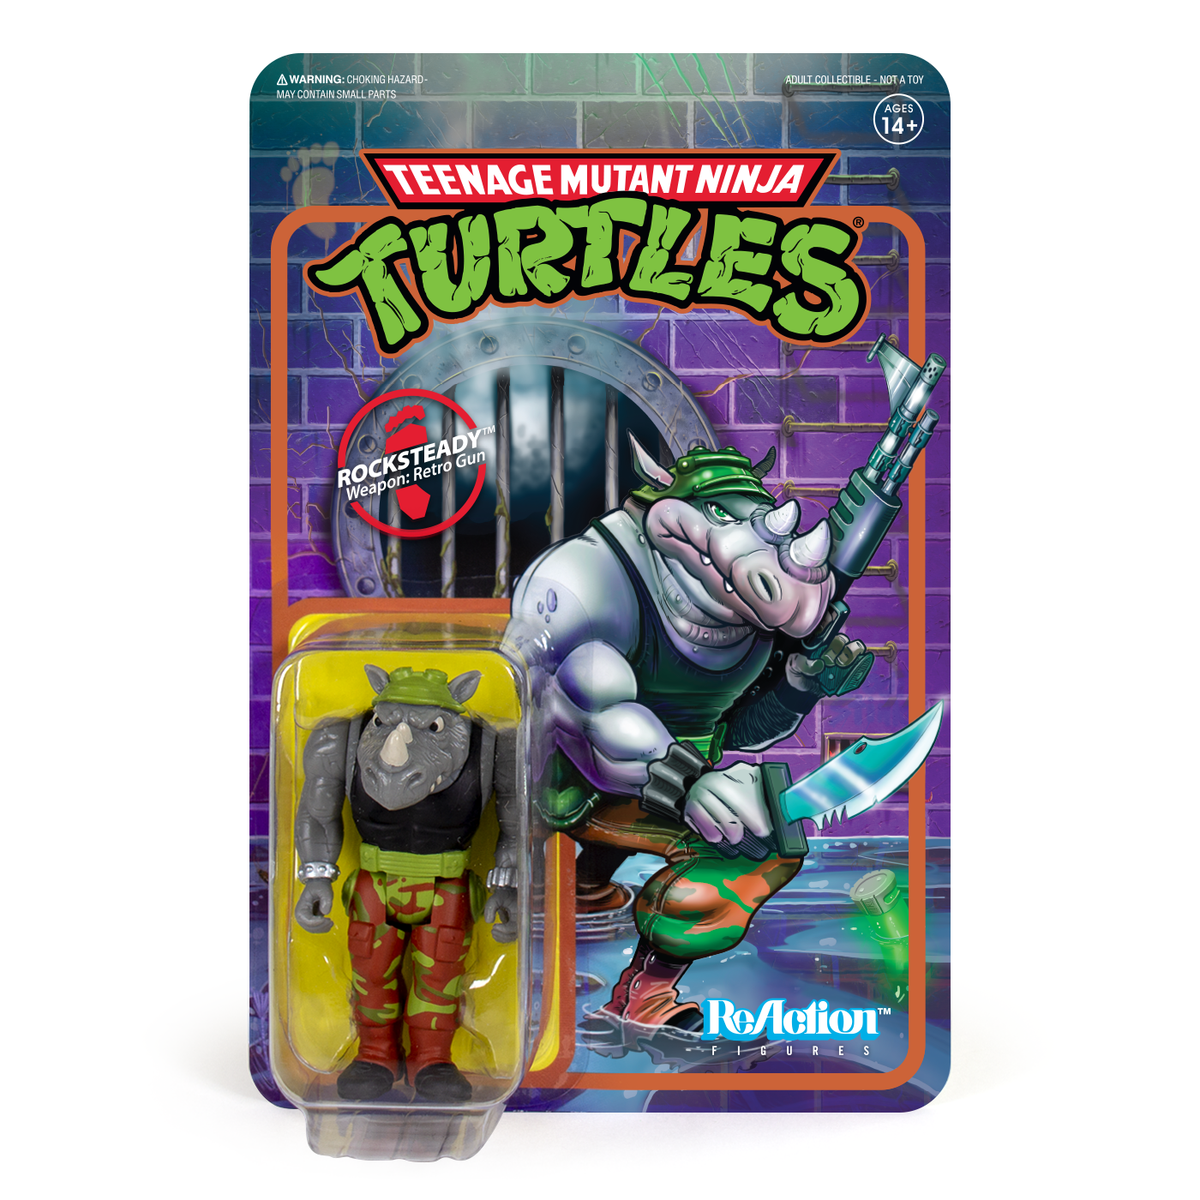 Teenage Mutant Ninja Turtles ReAction Figure - Rocksteady - Zlc Collectibles